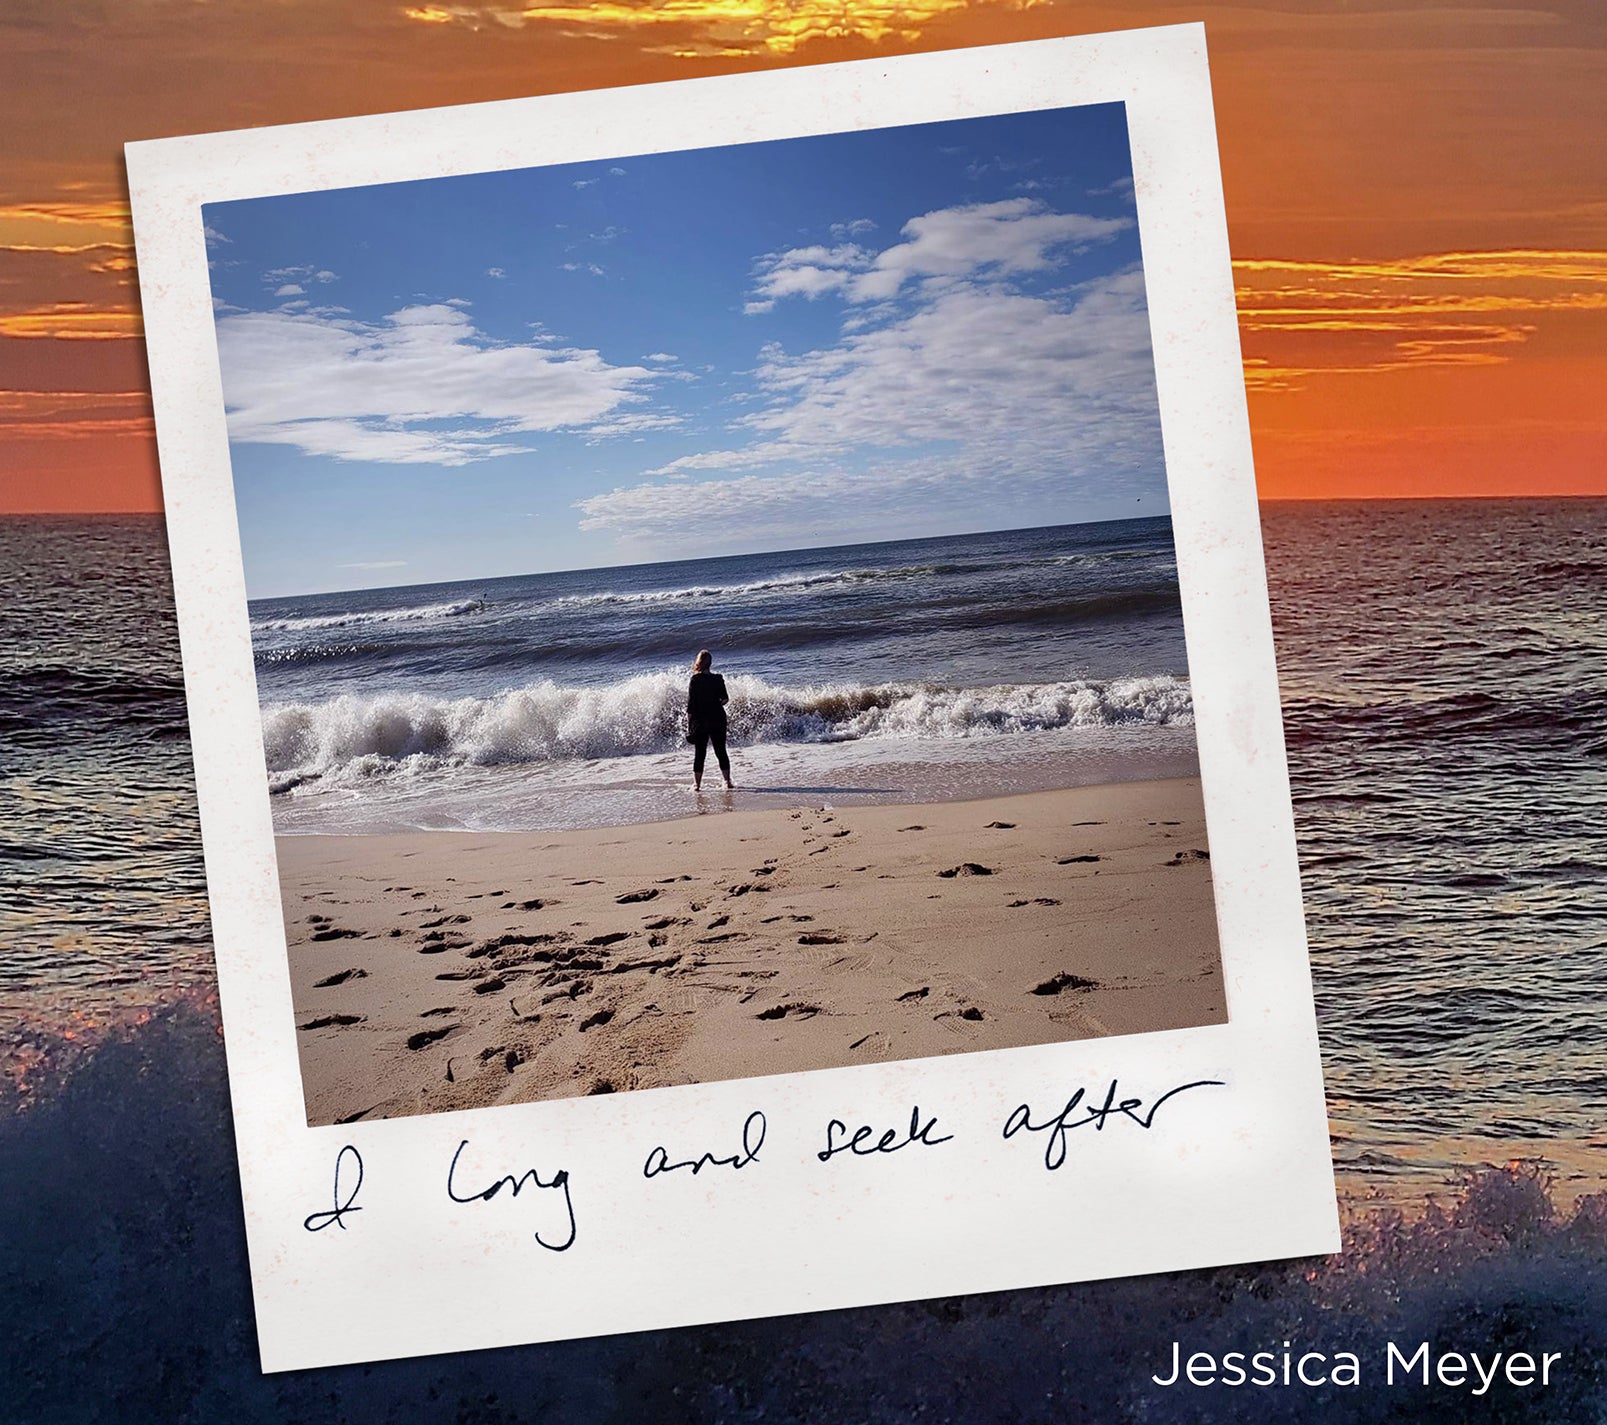 I long & seek after / Jessica Meyer